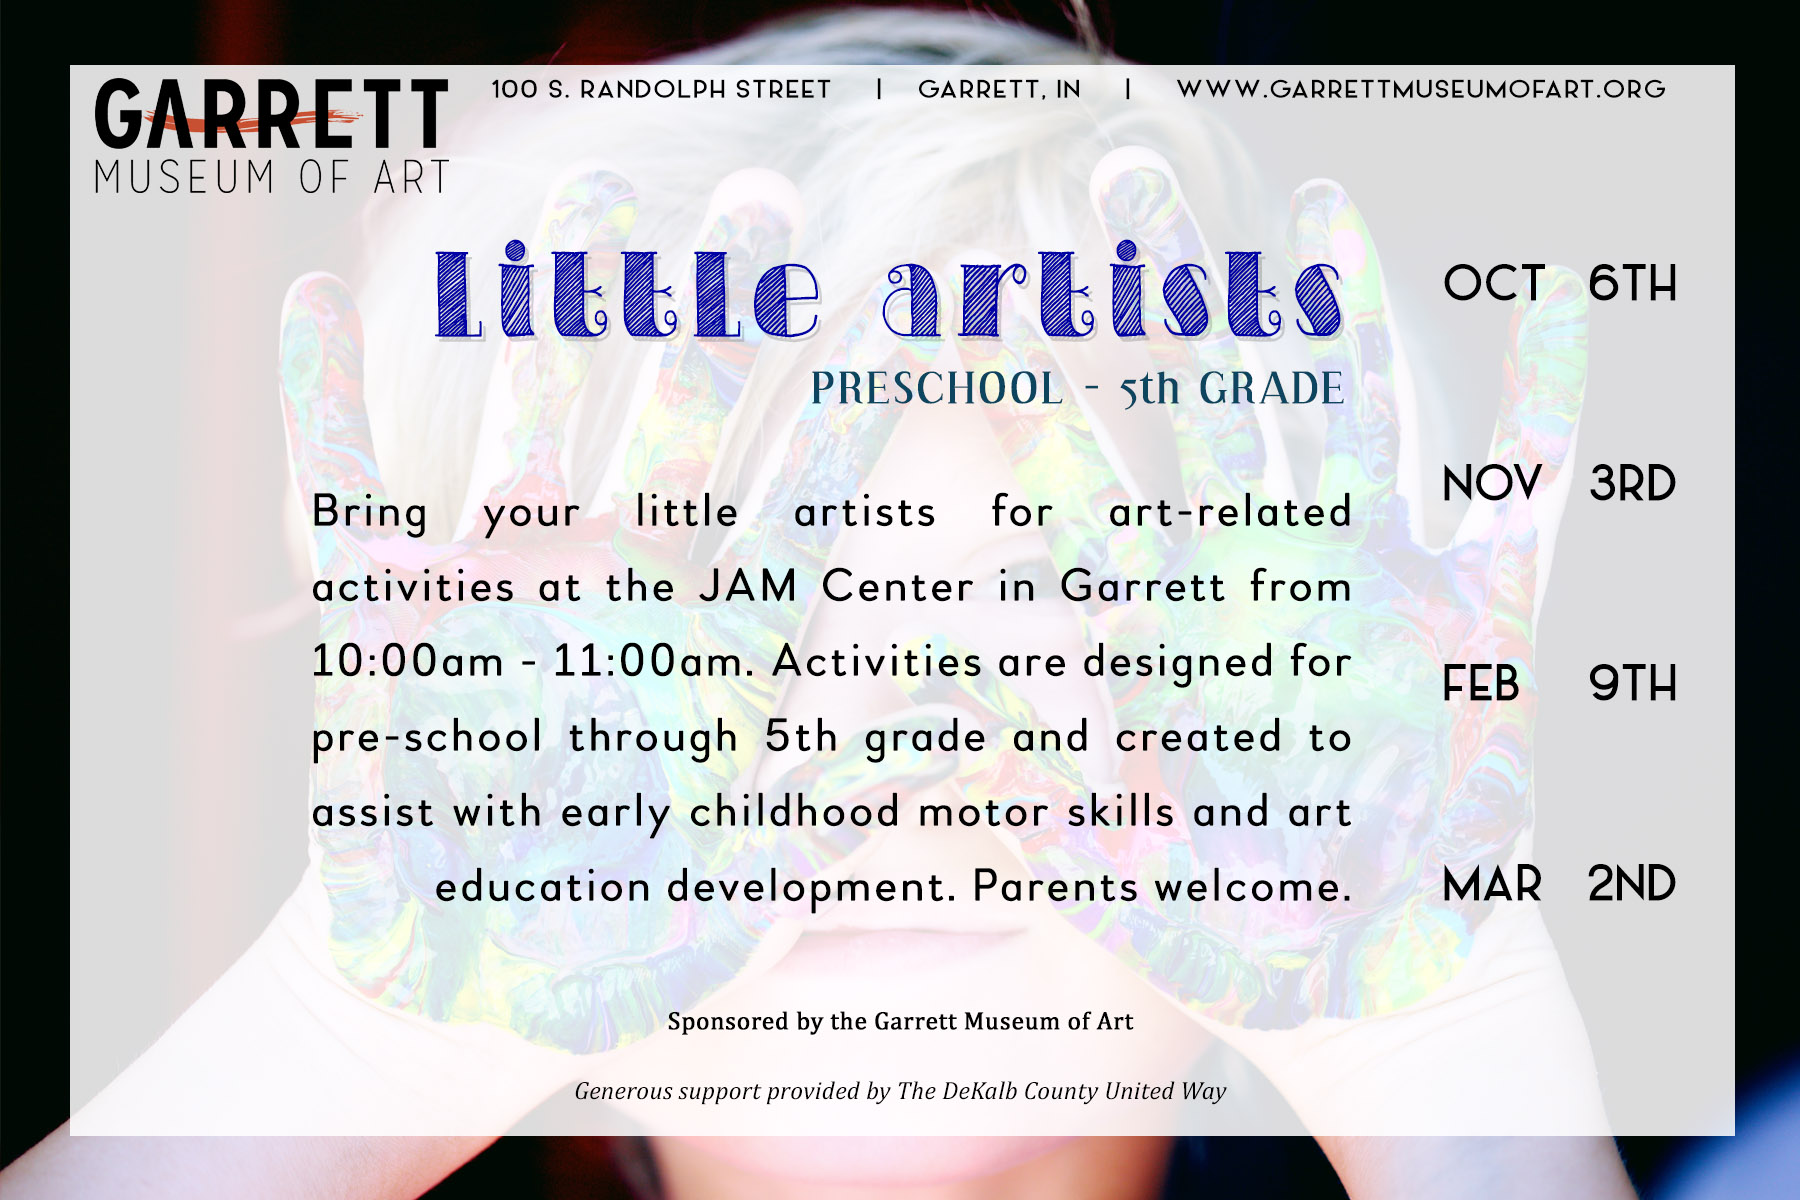 LITTLE ARTISTS - children's art program by the Garrett Museum of Art in Garrett, Indiana